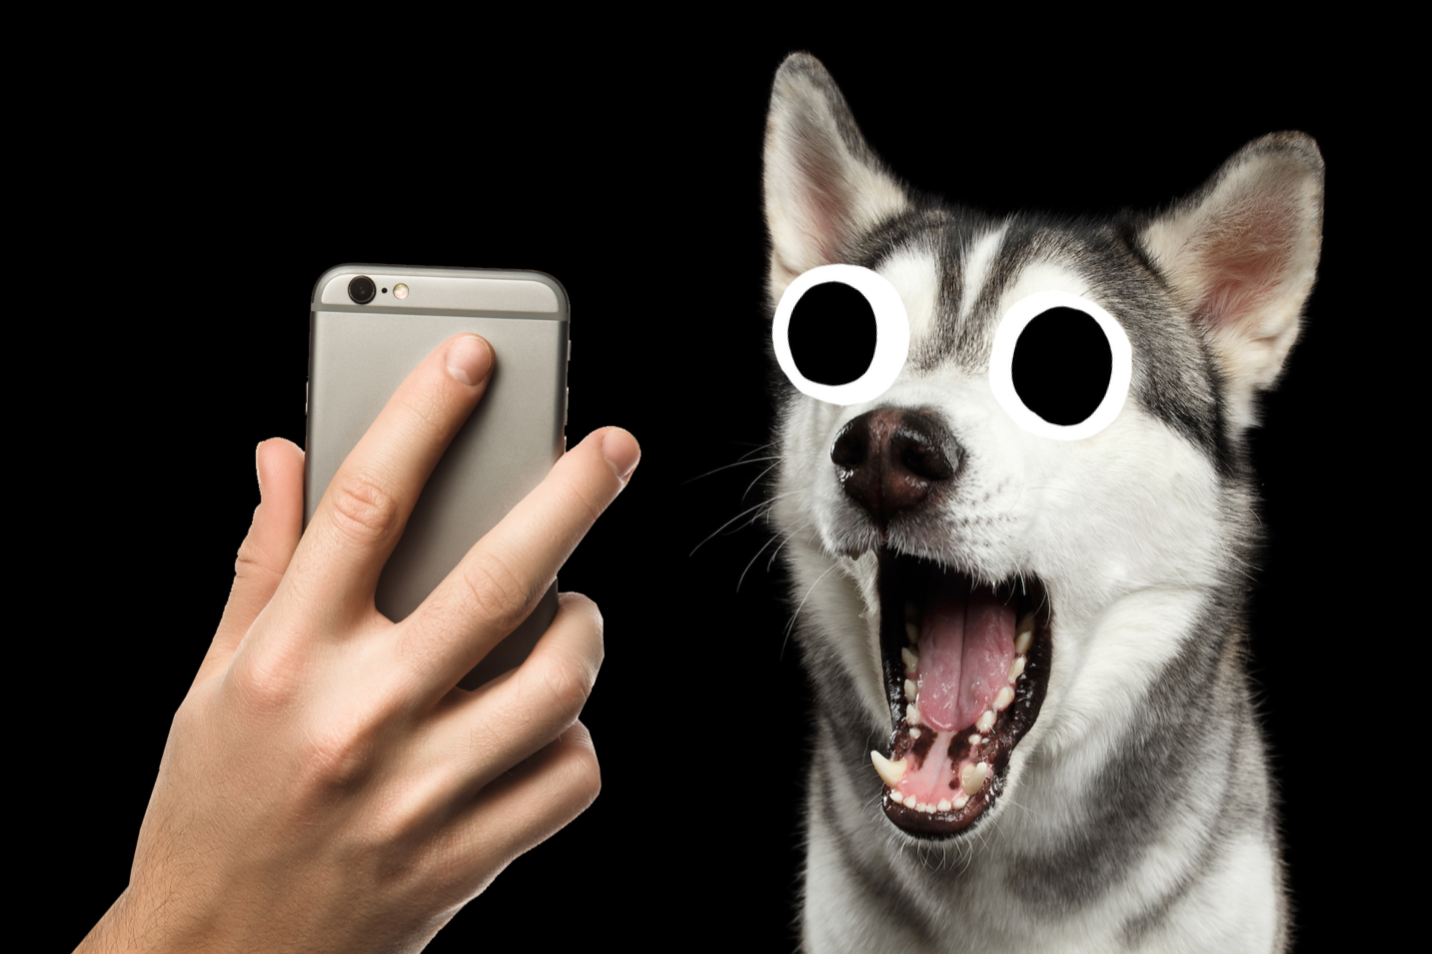 A dog reacting to a TikTok statistic